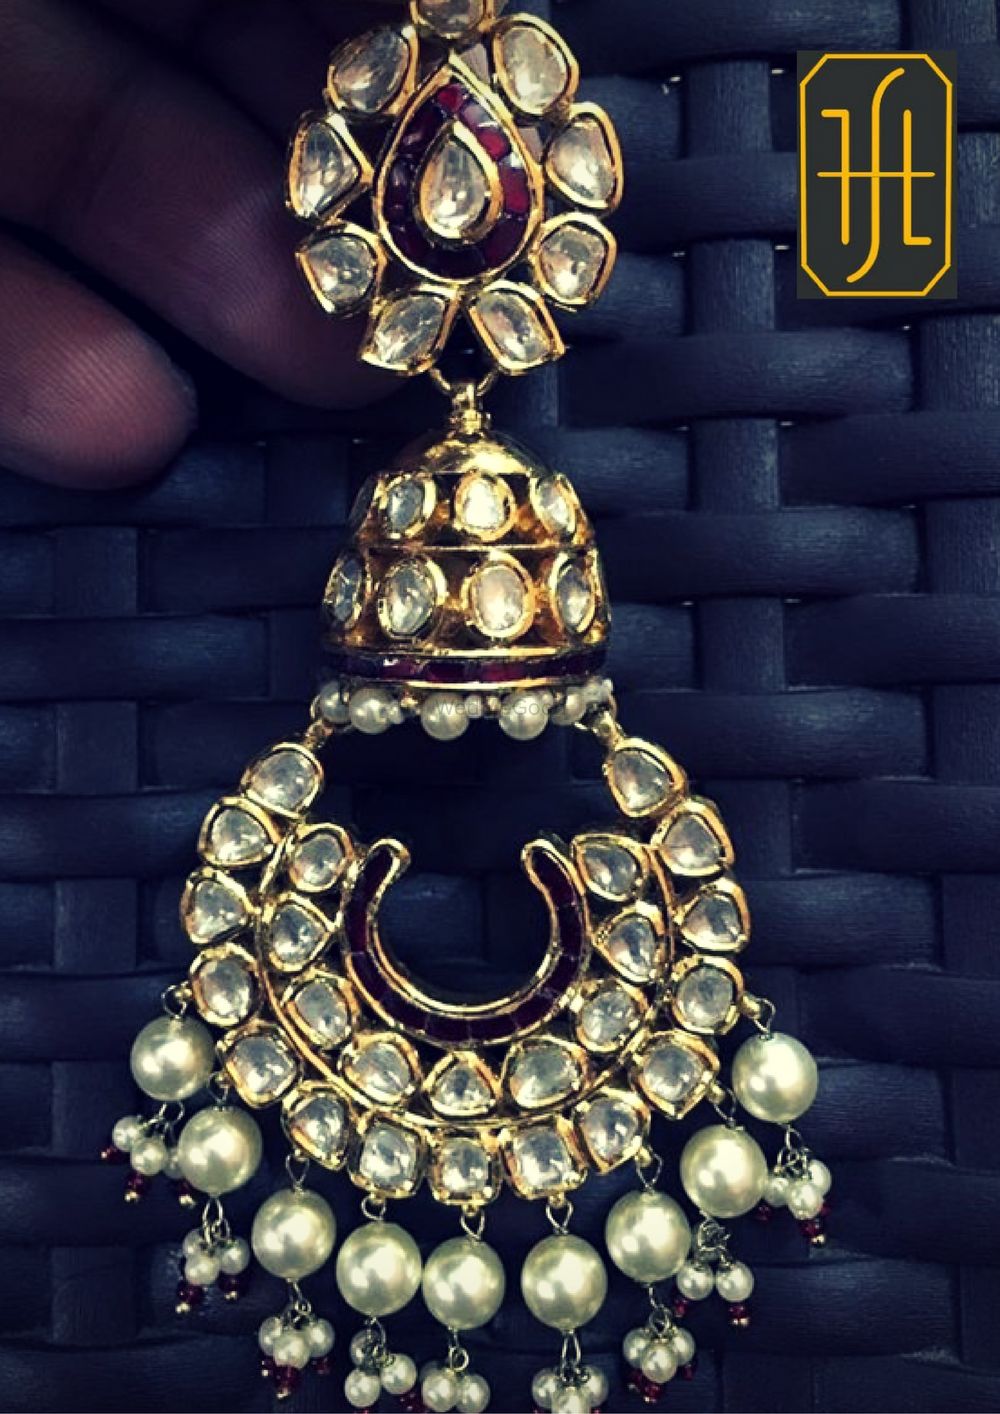 Photo From Uncut Diamond (Polki) Jewellery - By The Jewel Label By Uma Agarwal